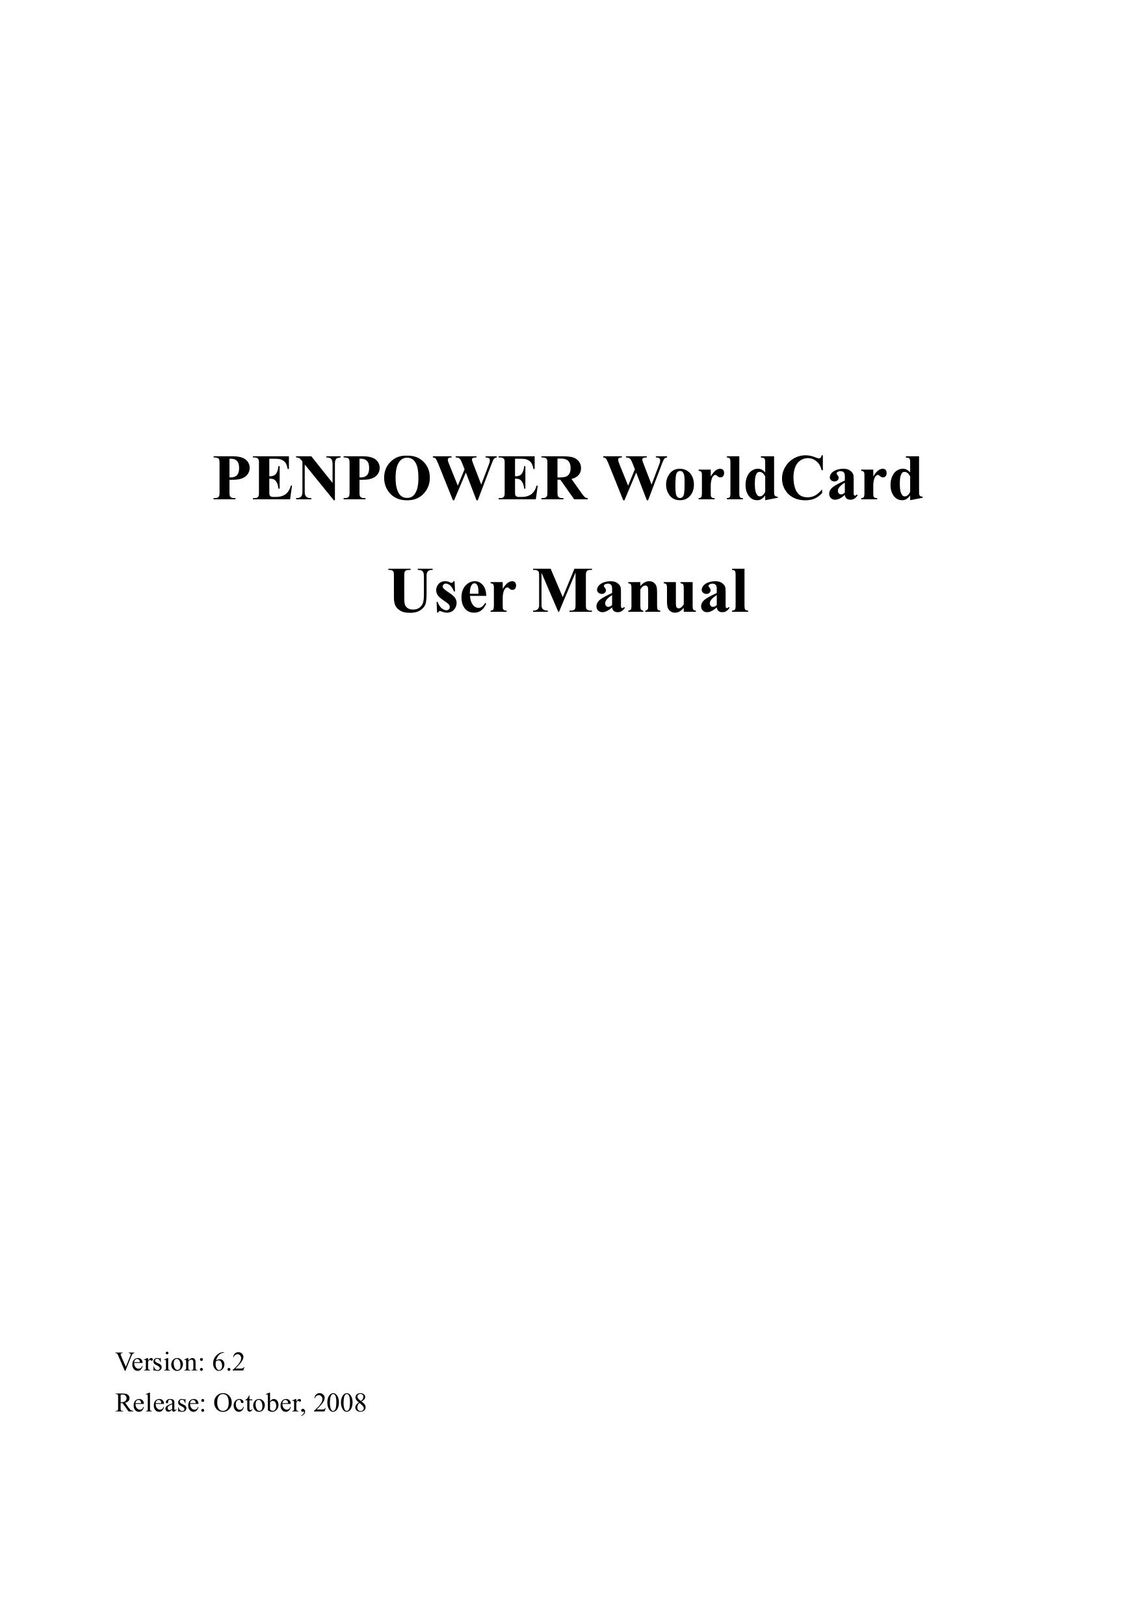 Penpower duet Scanner User Manual